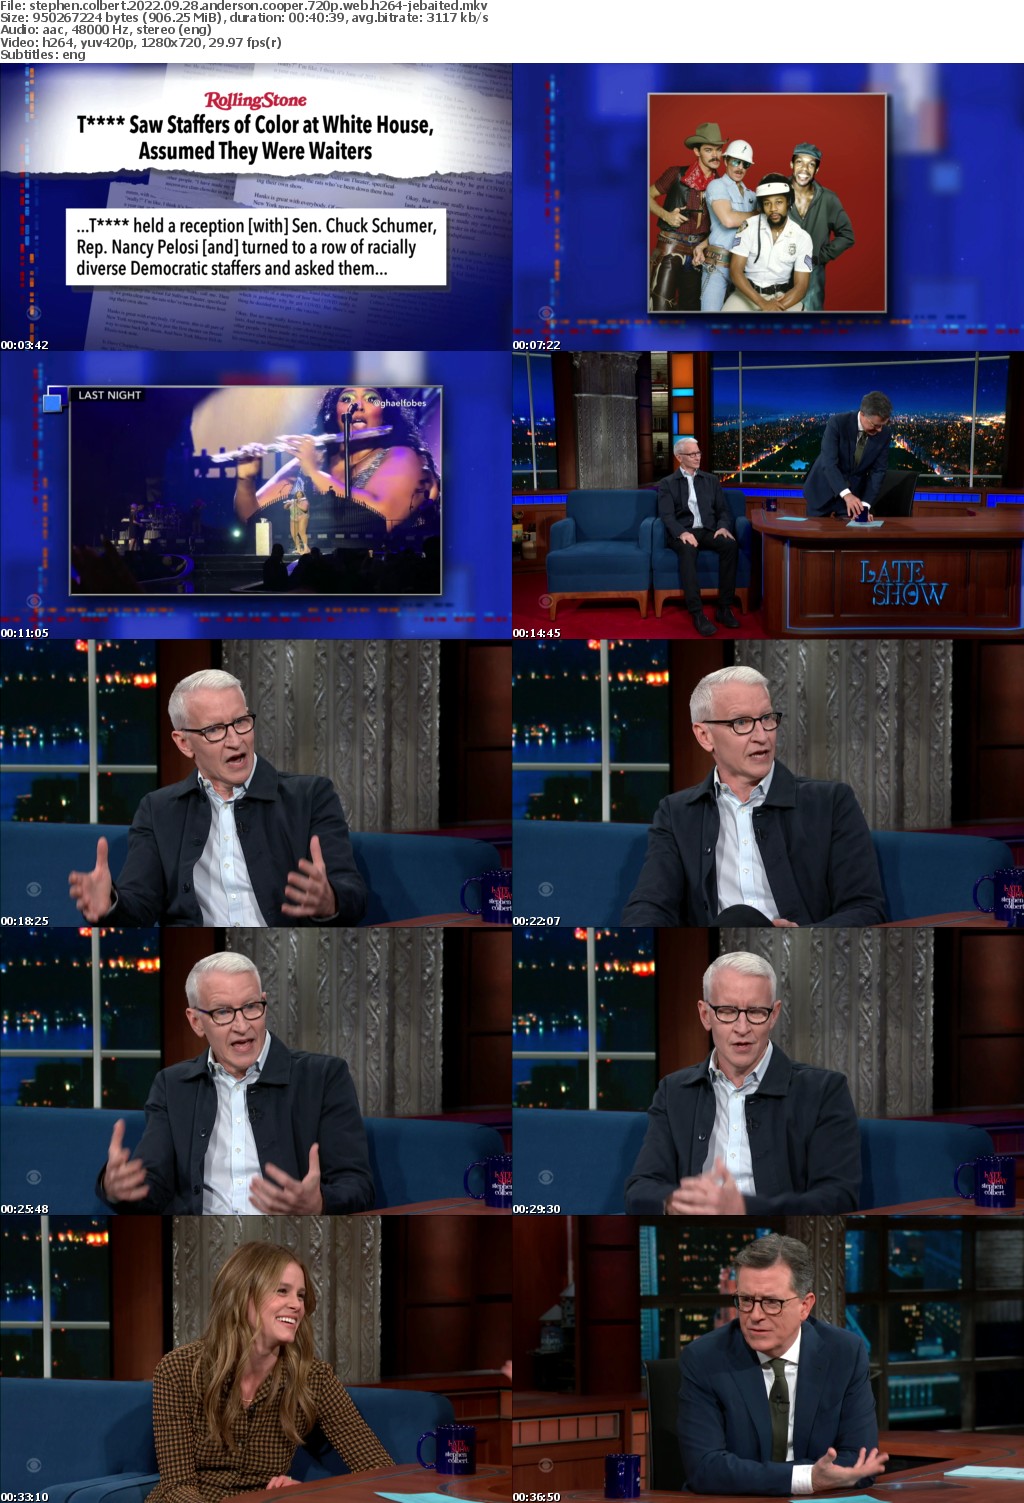 Stephen Colbert 2022 09 28 Anderson Cooper 720p WEB H264-JEBAITED